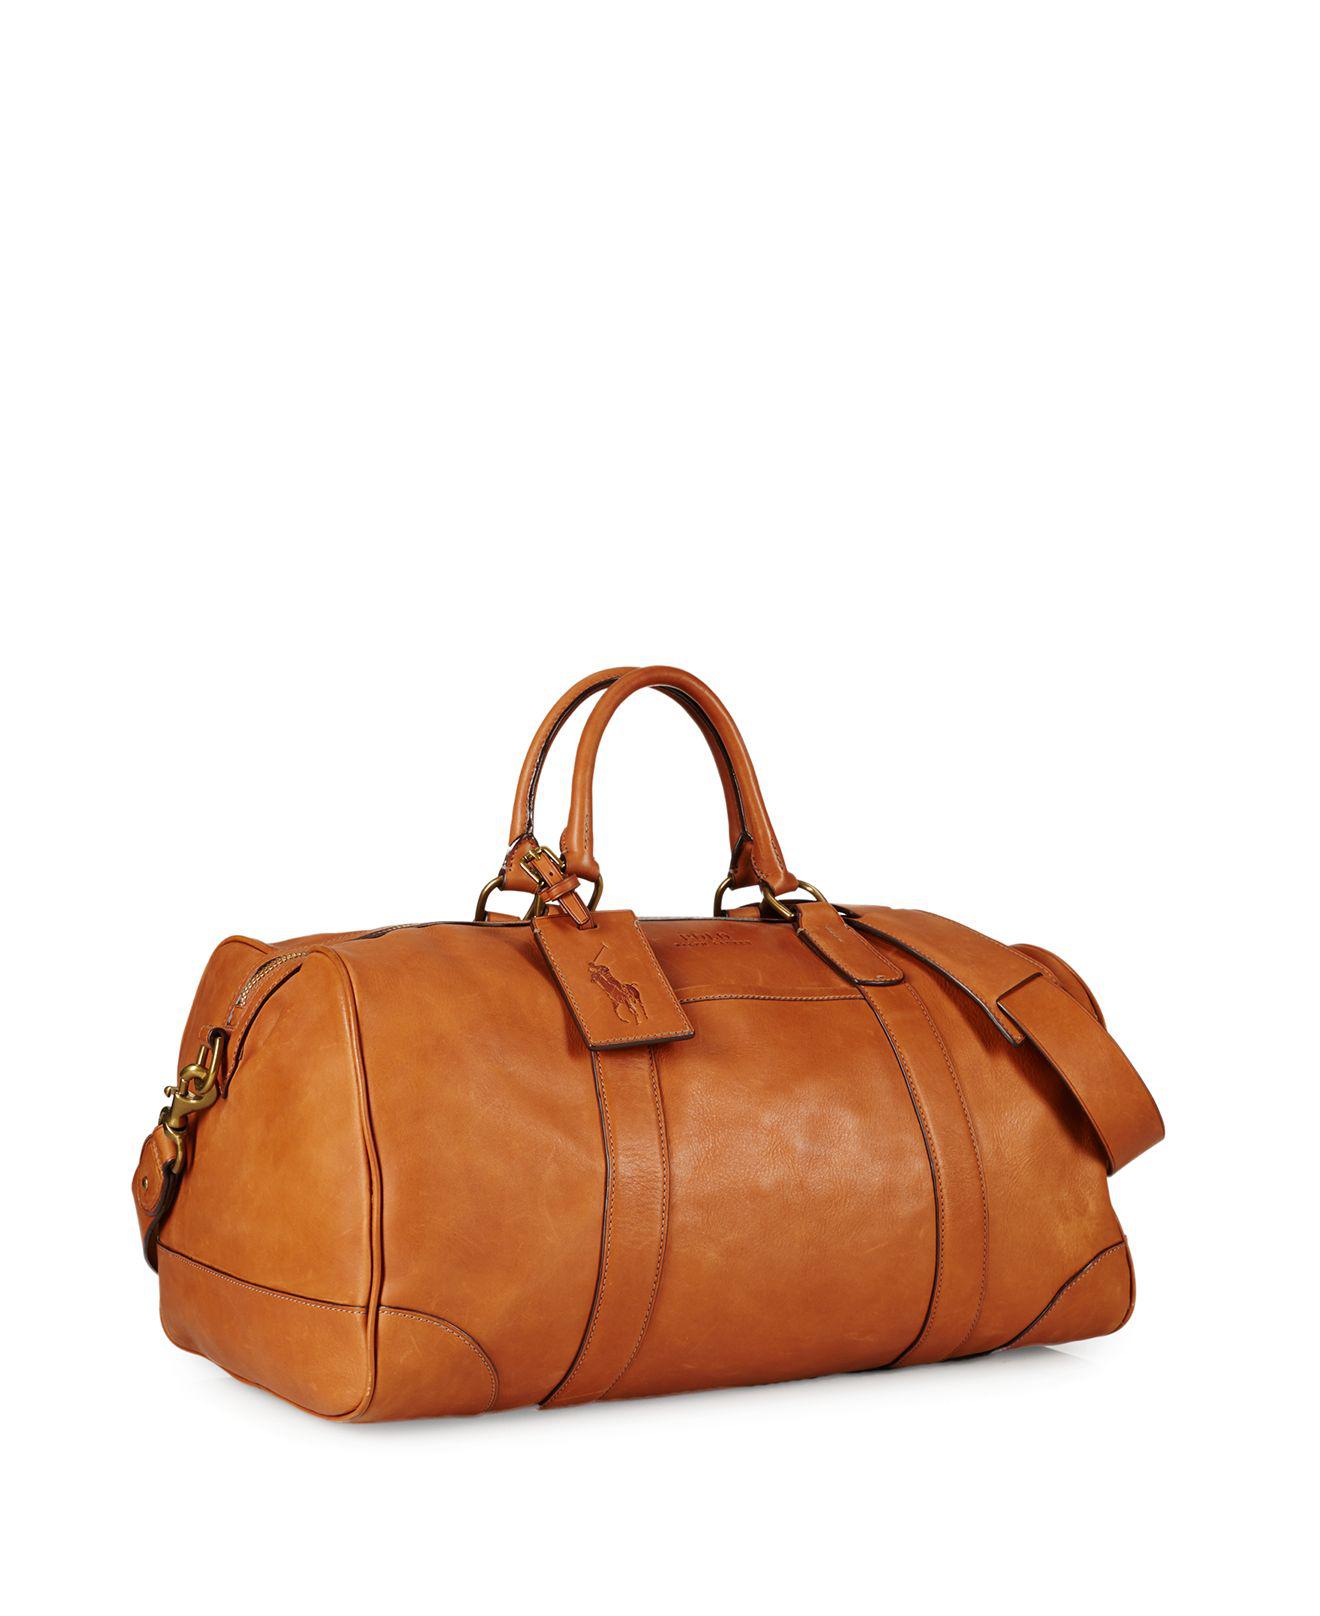 Lyst - Ralph Lauren Polo Core Leather Duffel Bag in Brown for Men